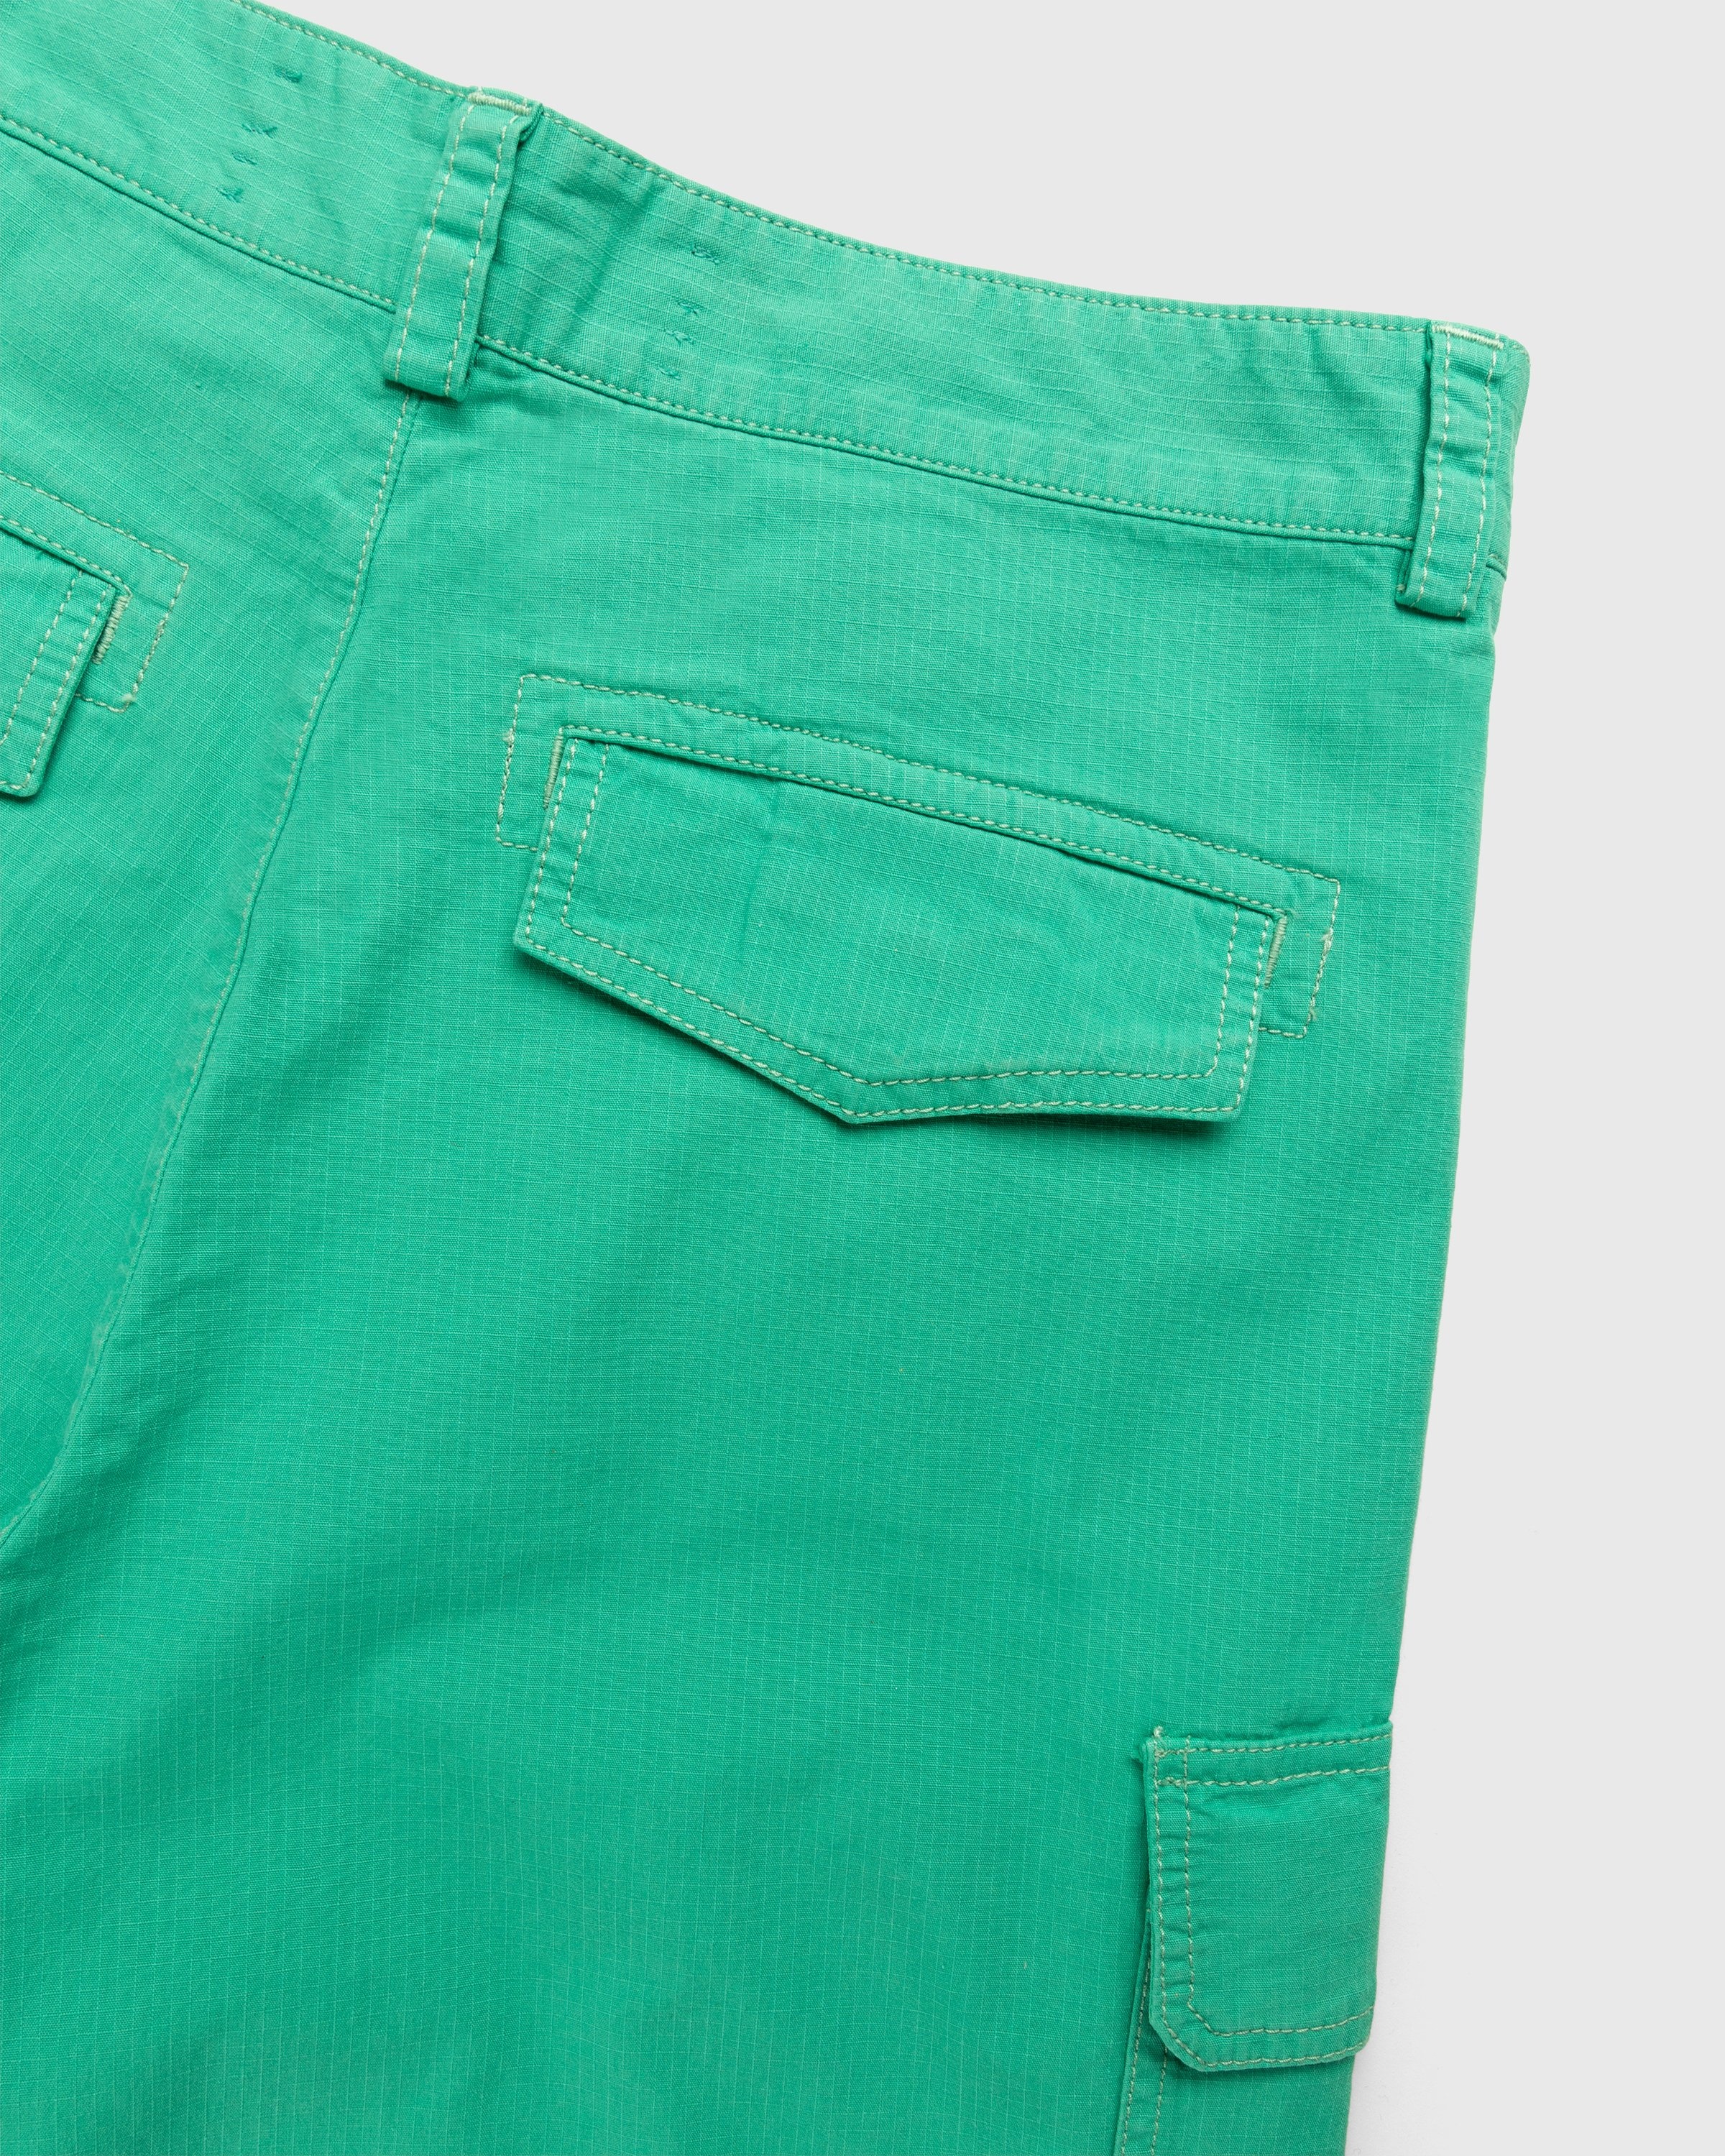 JACQUEMUS – Le Pantalon Peche Green - Pants - Green - Image 7